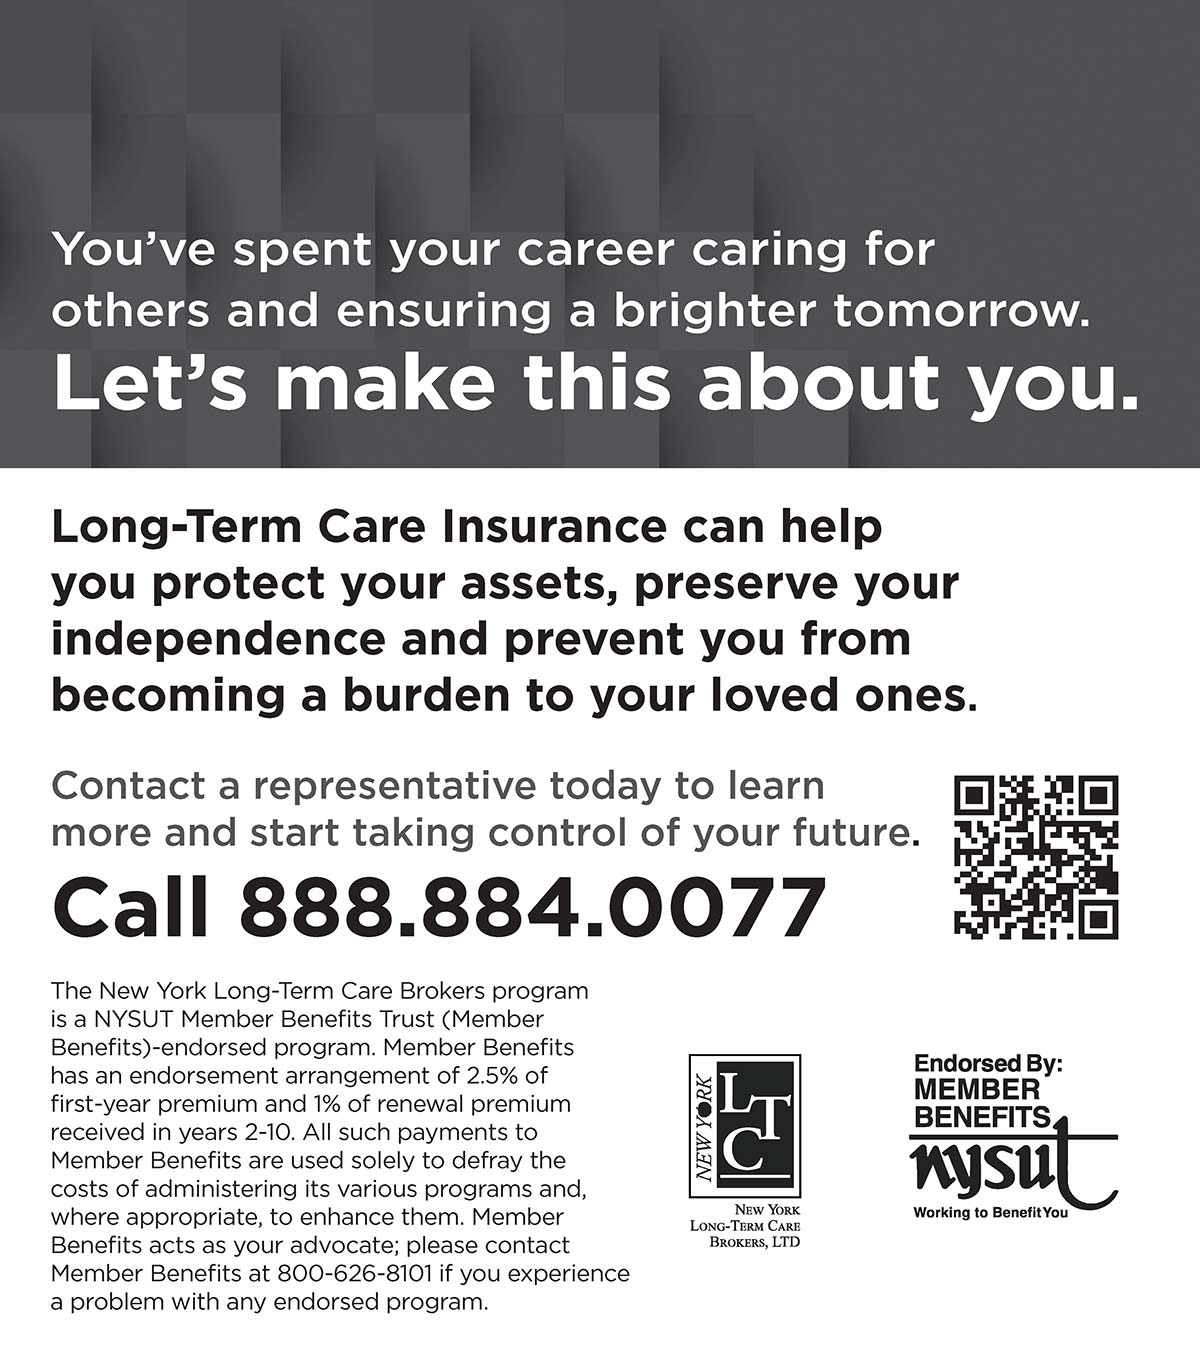 New York Long-Term Care Brokers, LTD Advertisement